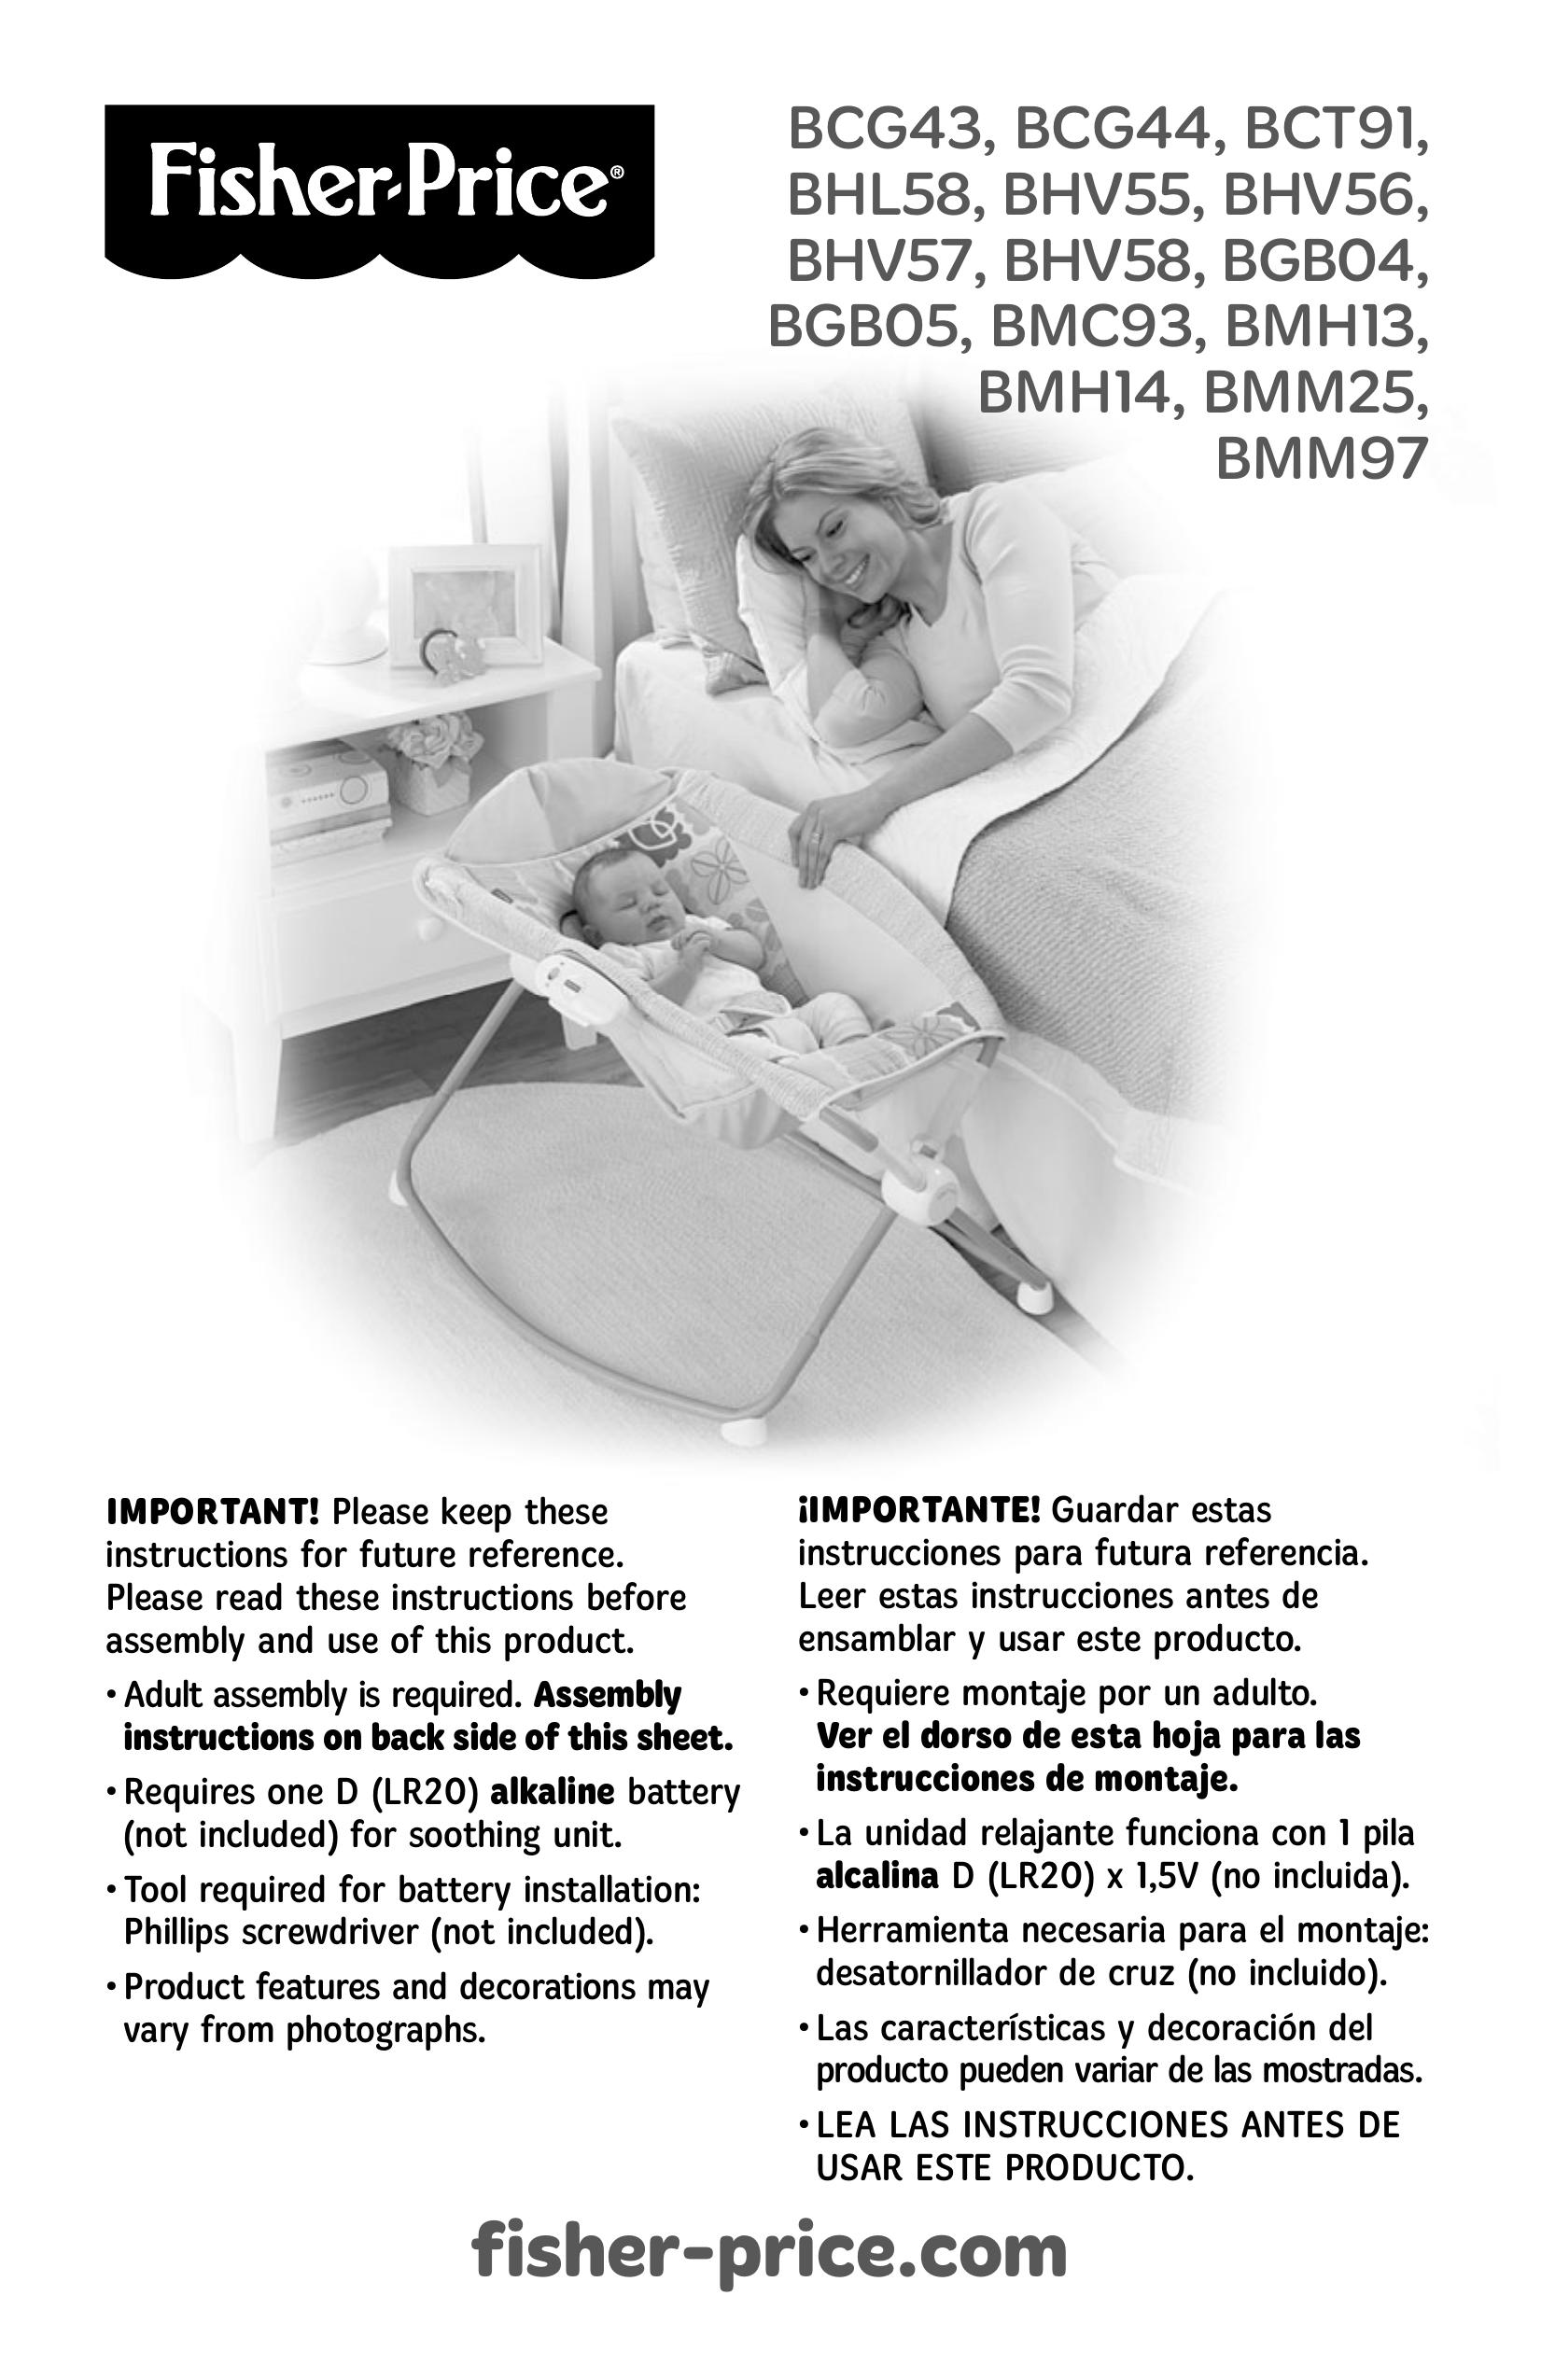 Fisher-Price BMM97 Sleep Apnea Machine User Manual